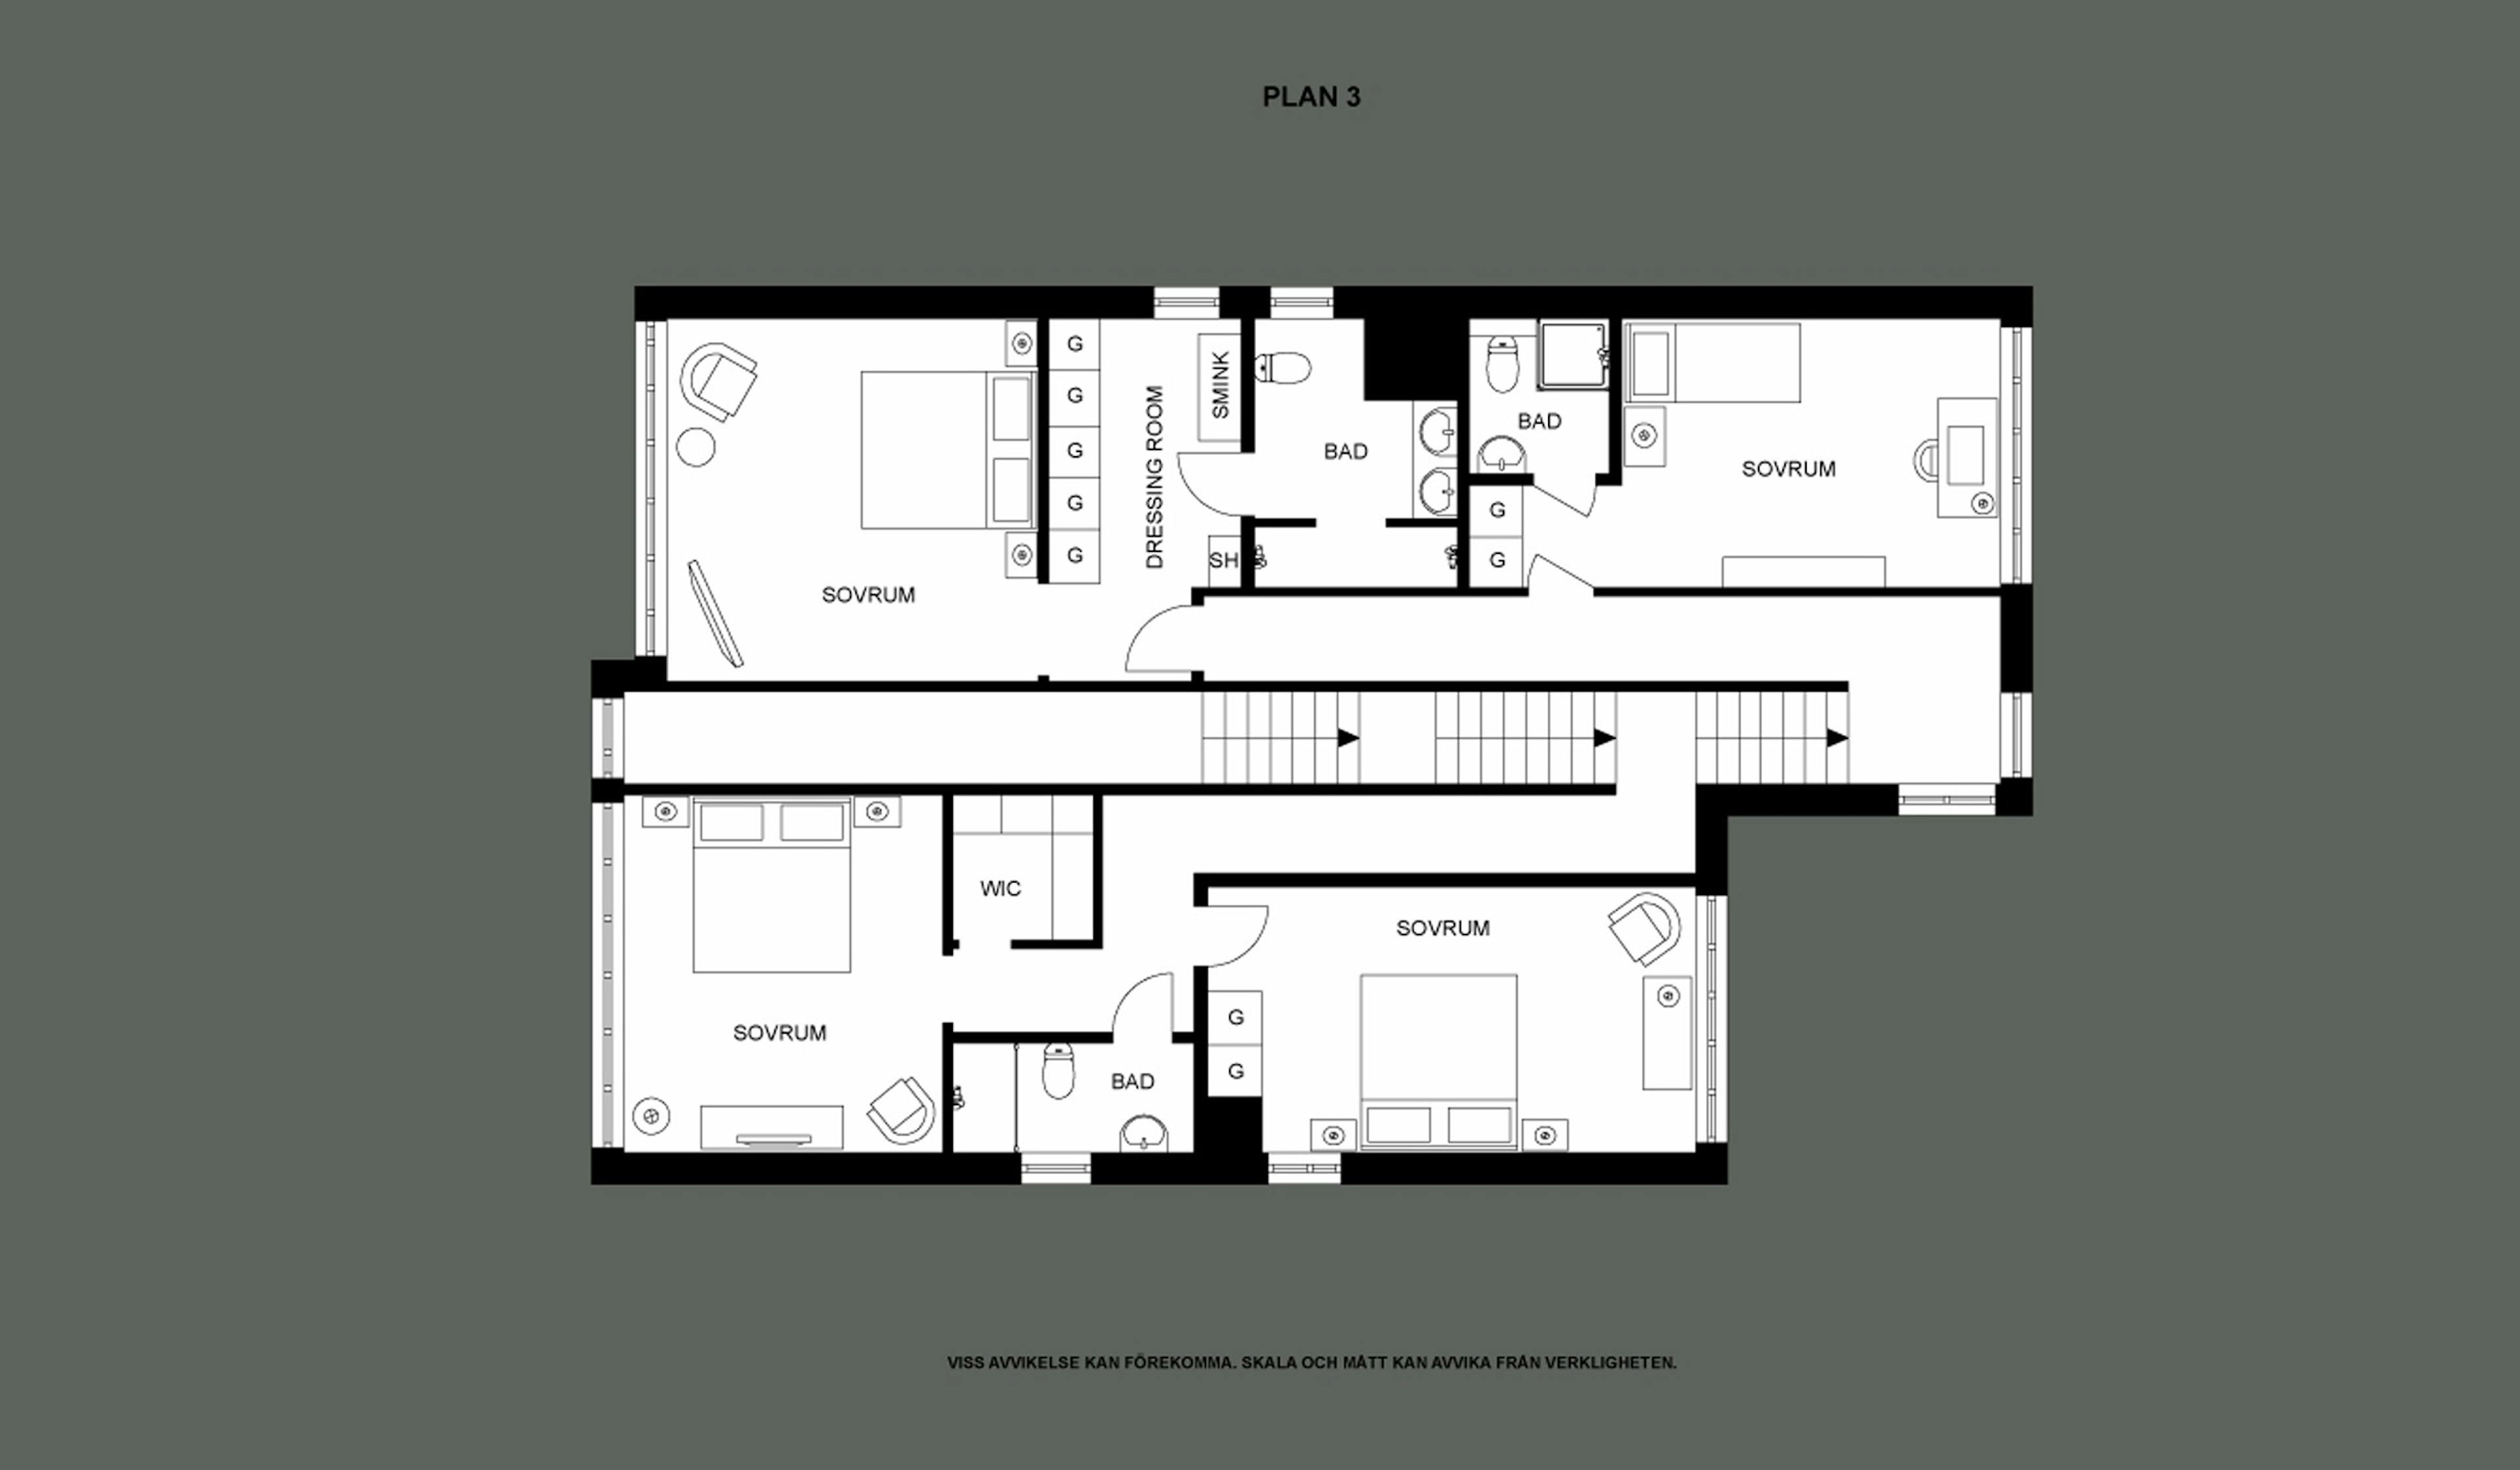 Energy efficient private residence Floor Plan three